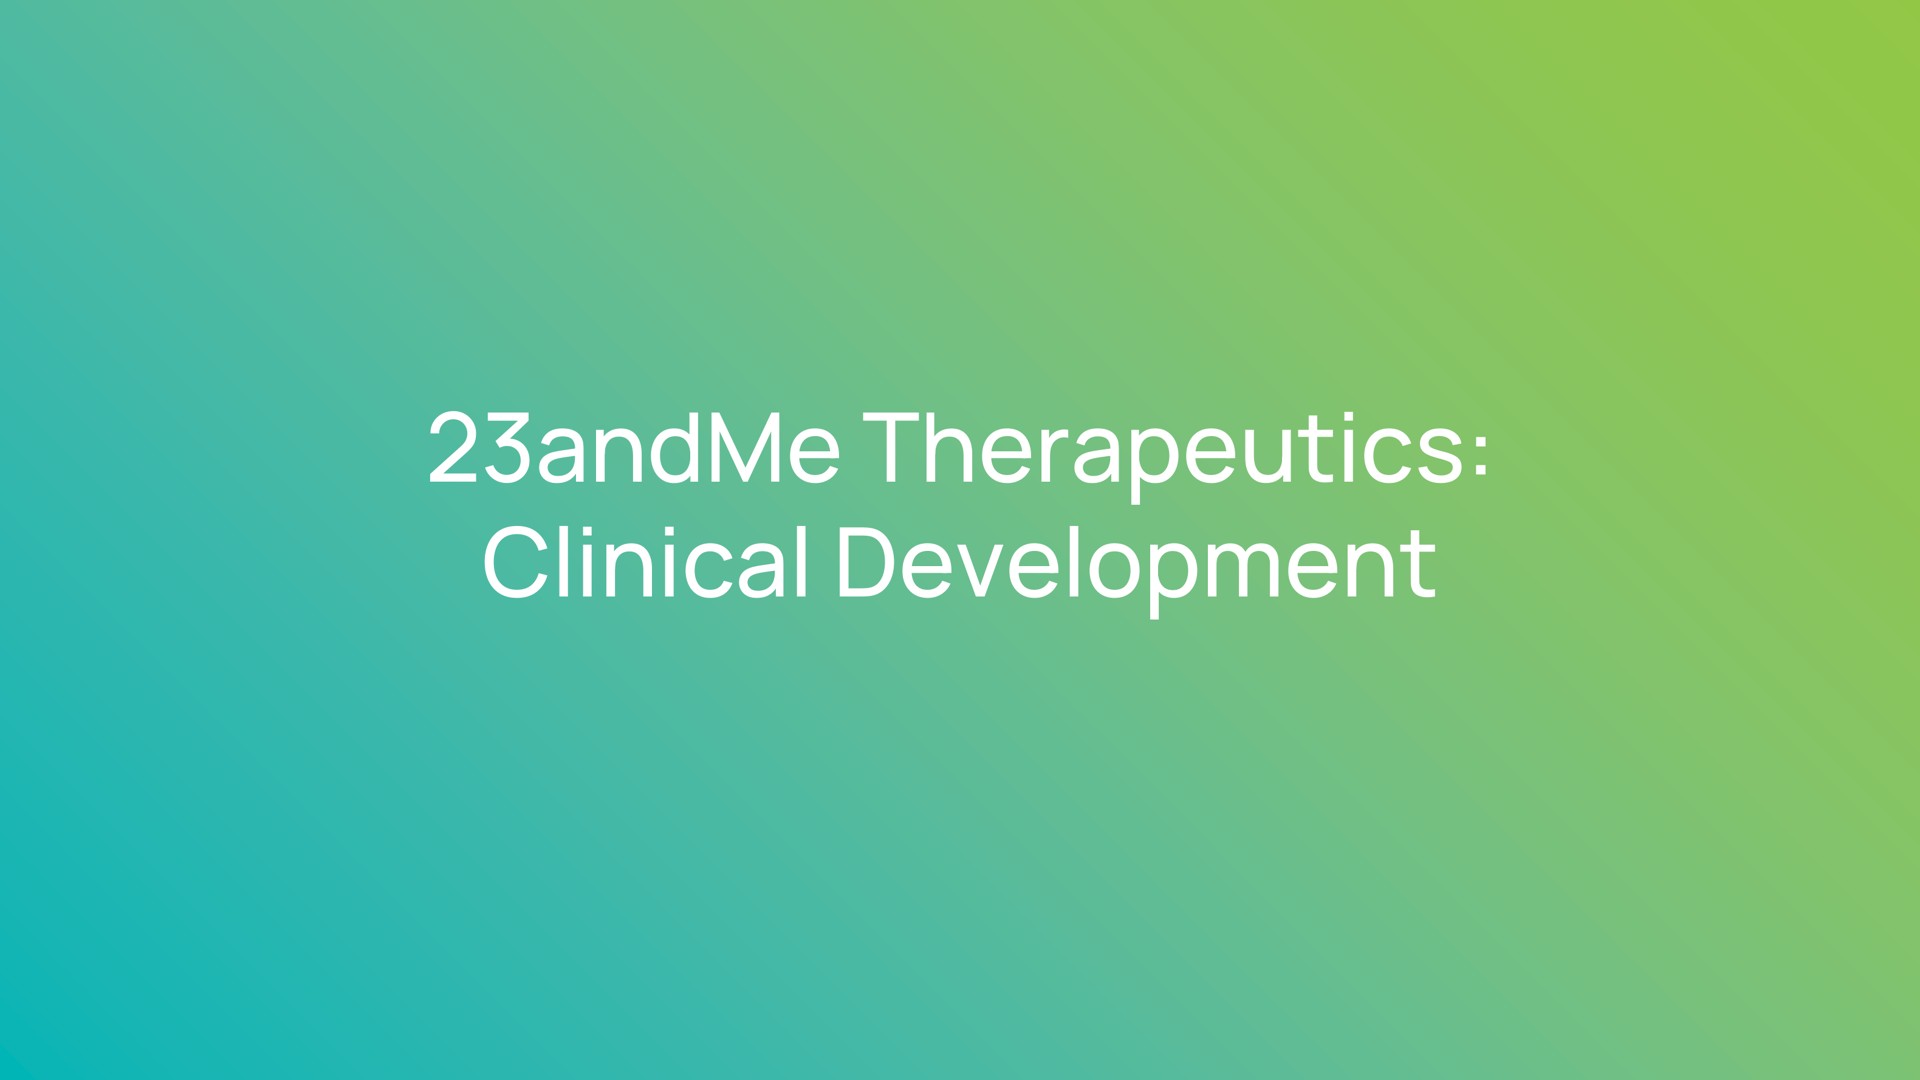 therapeutics clinical development | 23andMe